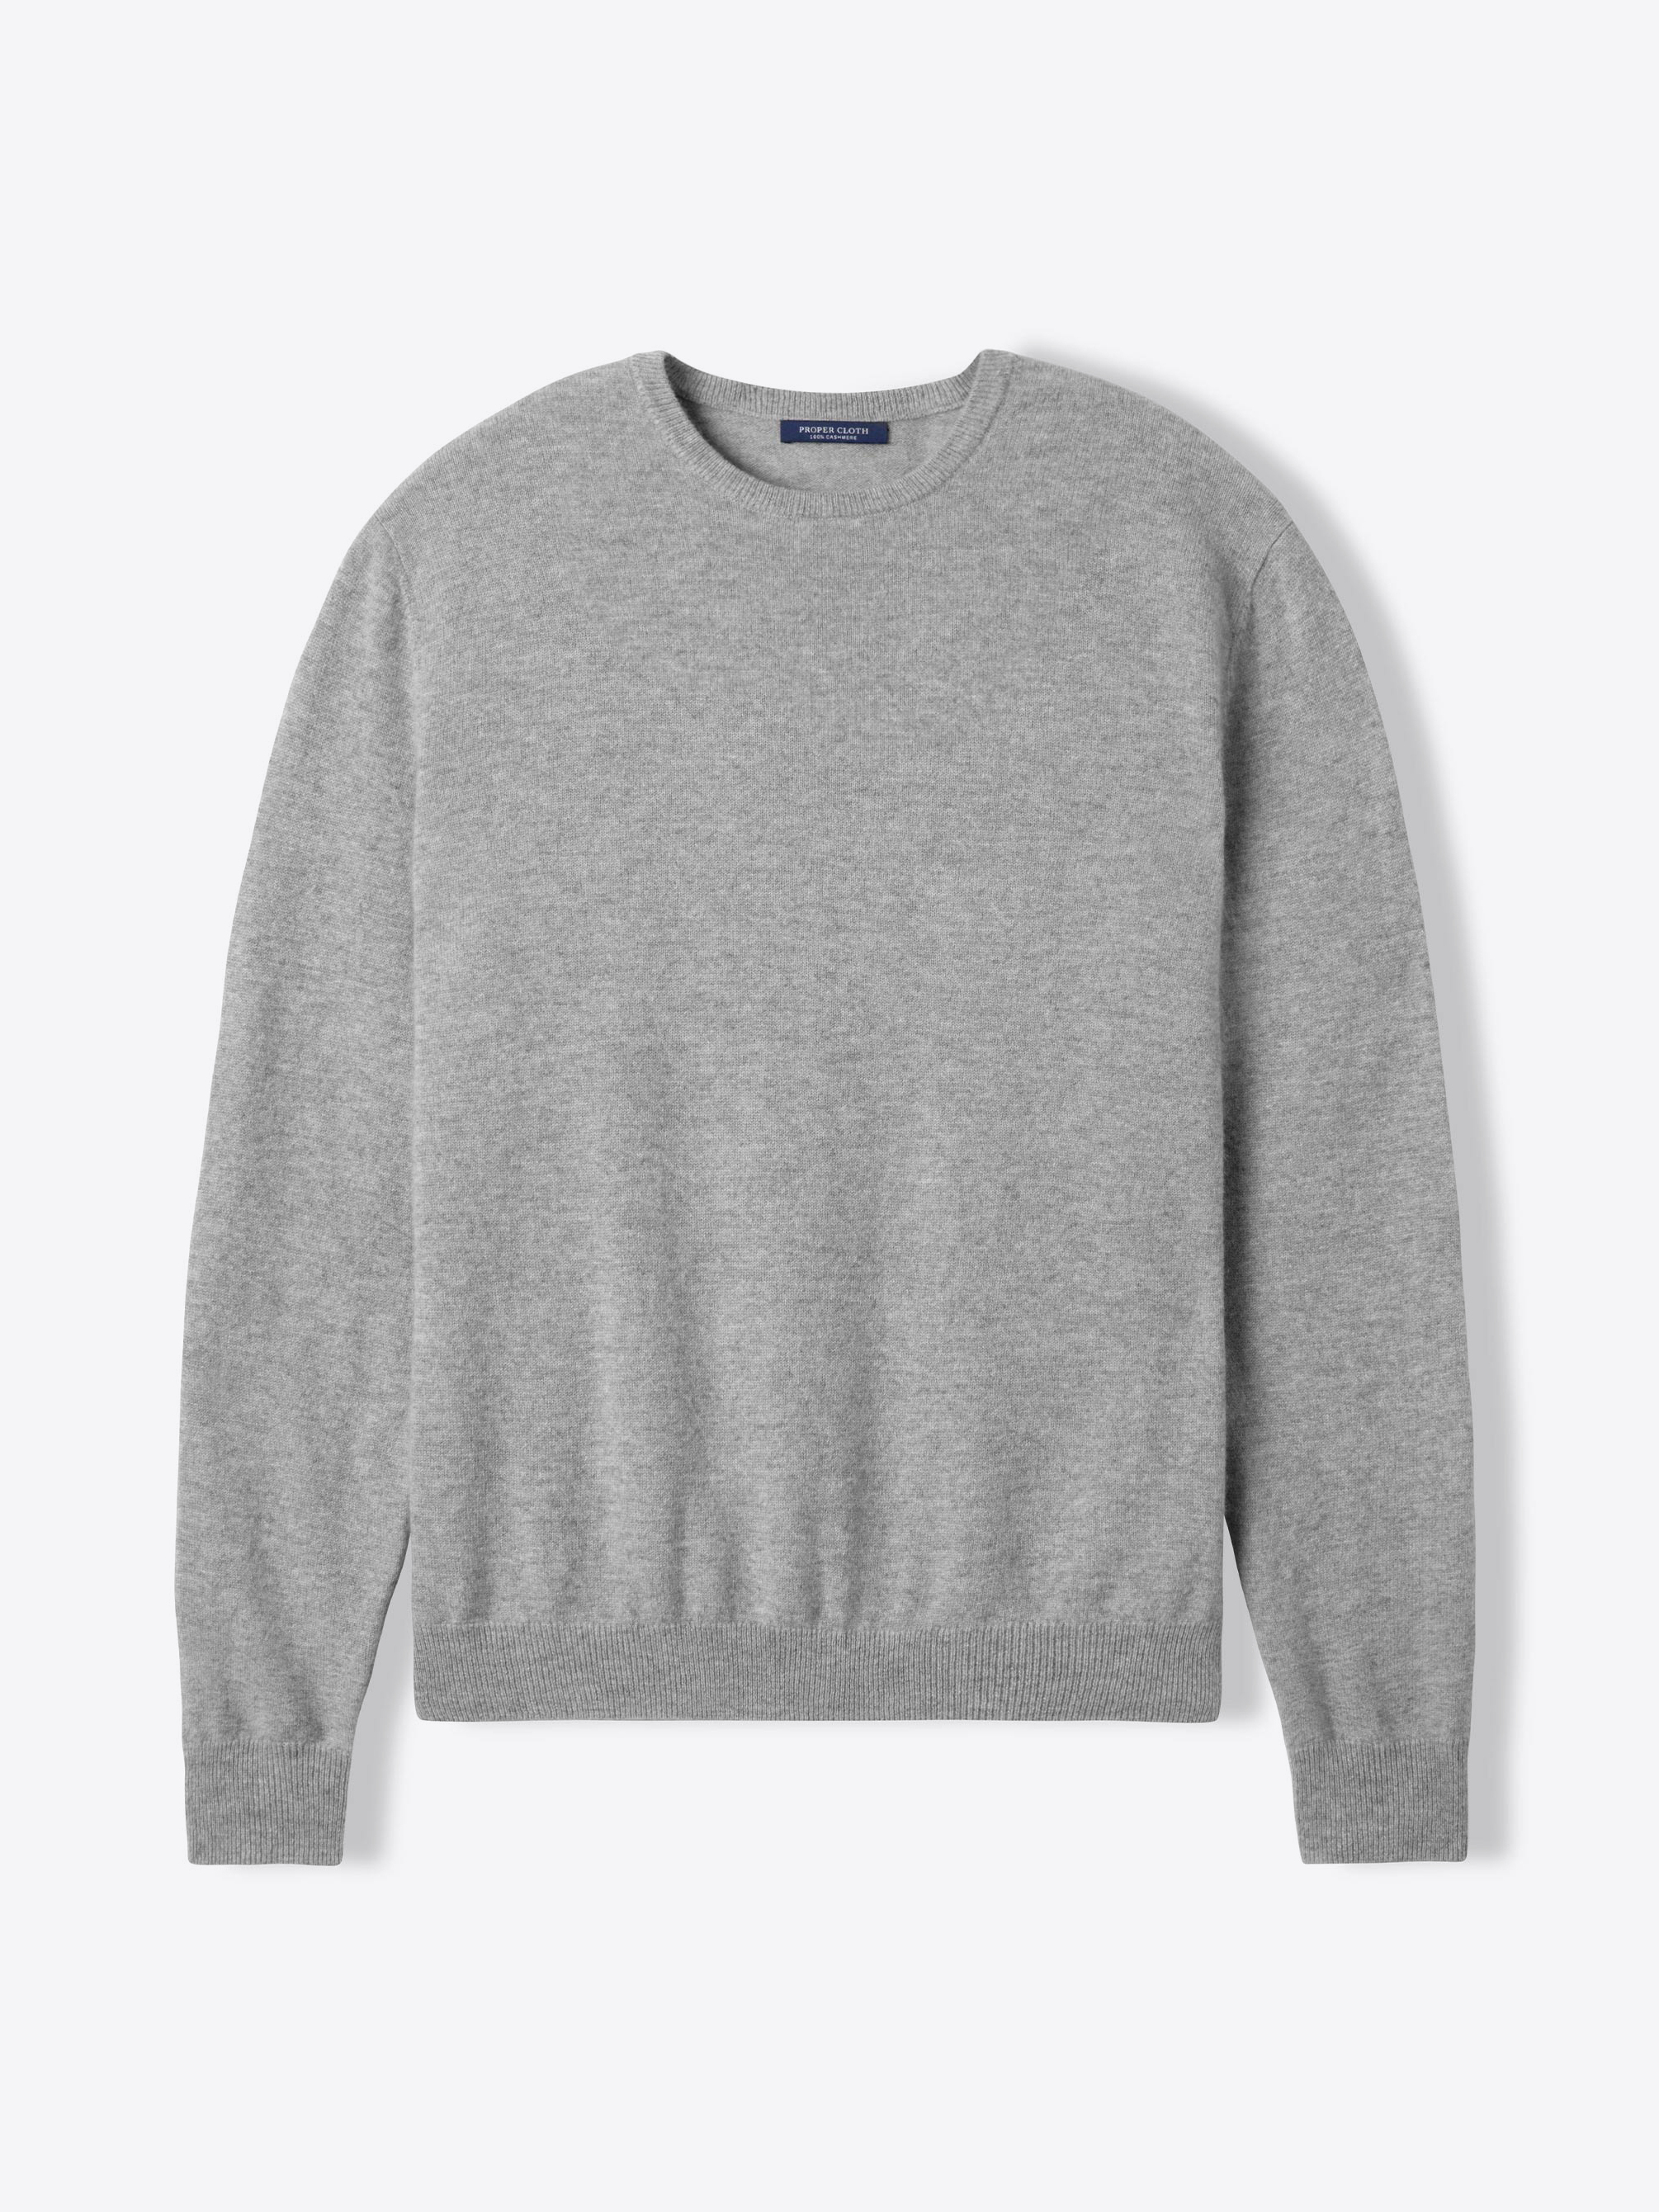 Zoom Image of Light Grey Cashmere Crewneck Sweater